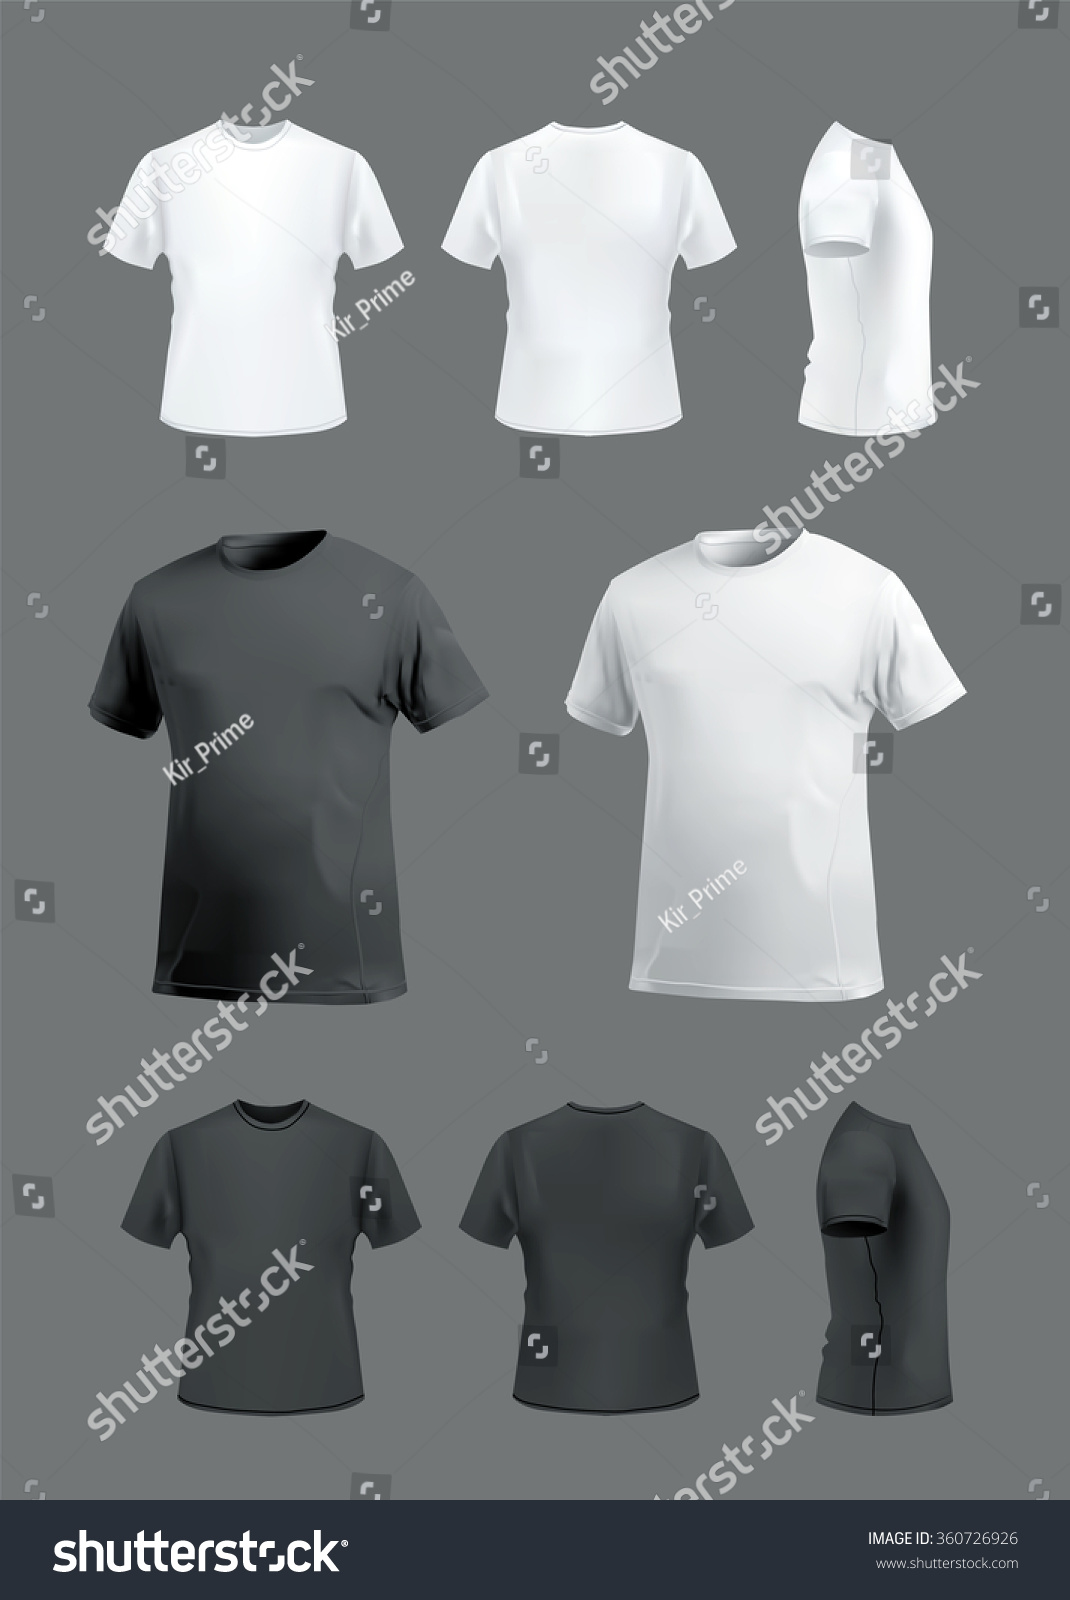 Download Tshirt Mockup Set On Dark Background Stock Vector Royalty Free 360726926